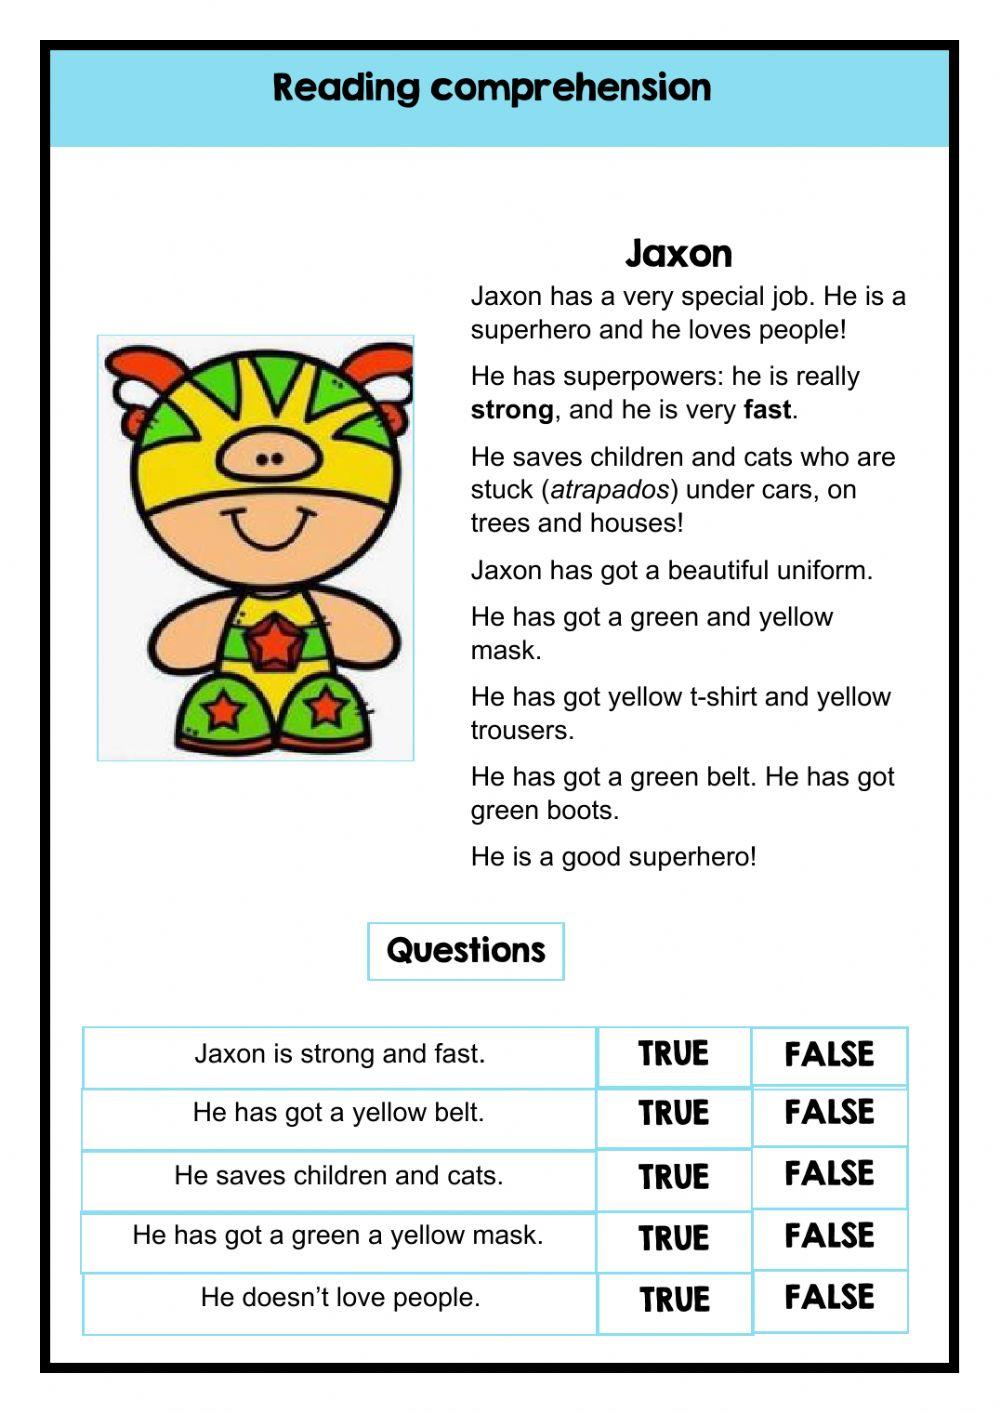 Reading comprehension - Jaxon